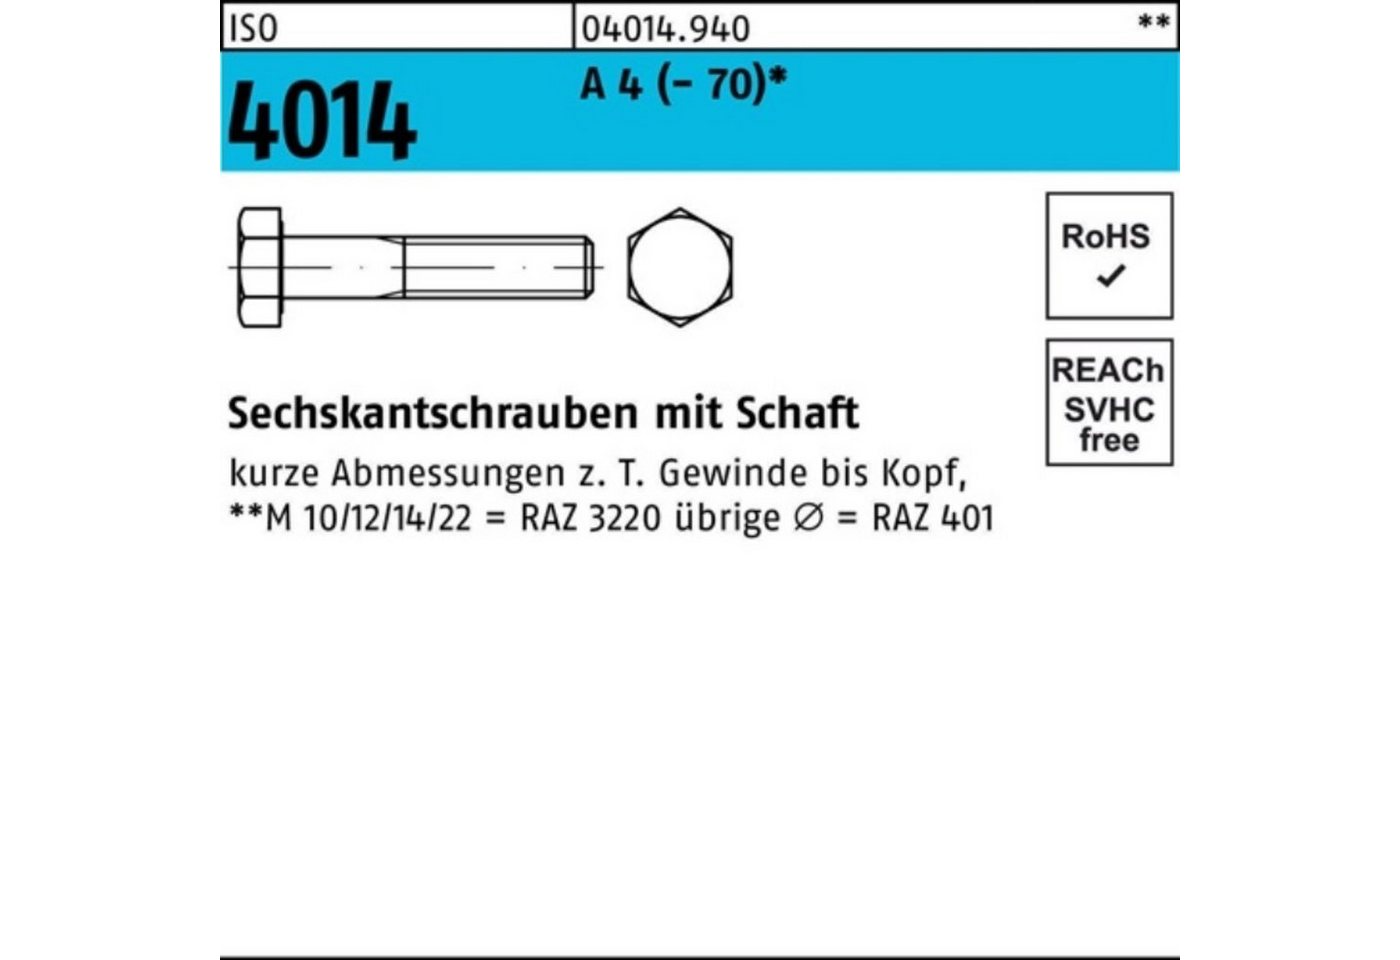 Bufab Sechskantschraube 100er Pack Sechskantschraube ISO 4014 Schaft M14x 80 A 4 (70) 50 St von Bufab